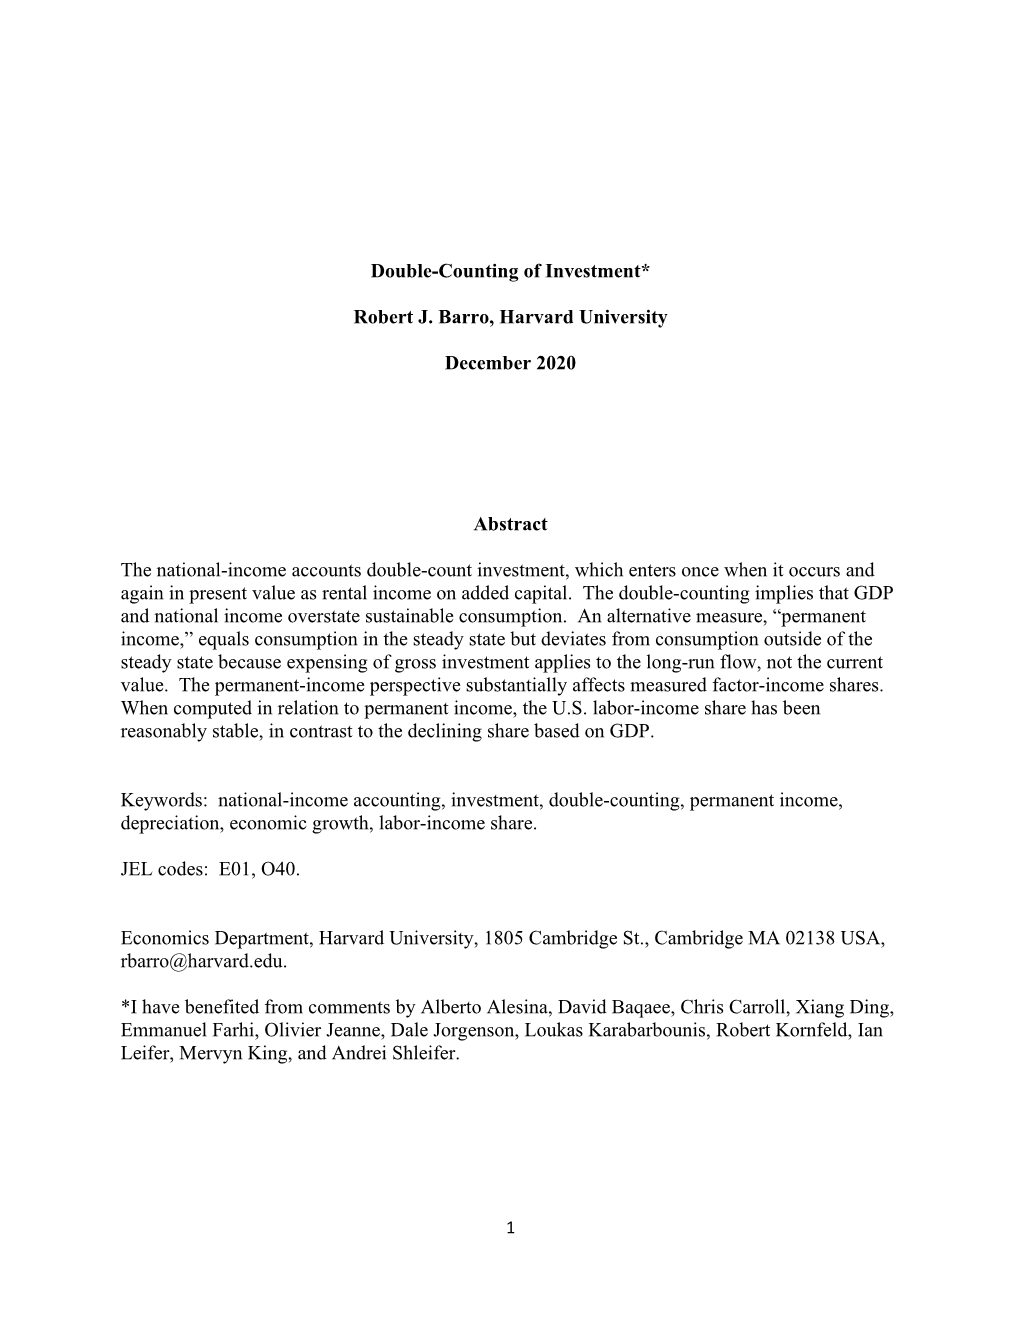 Double-Counting of Investment* Robert J. Barro, Harvard University